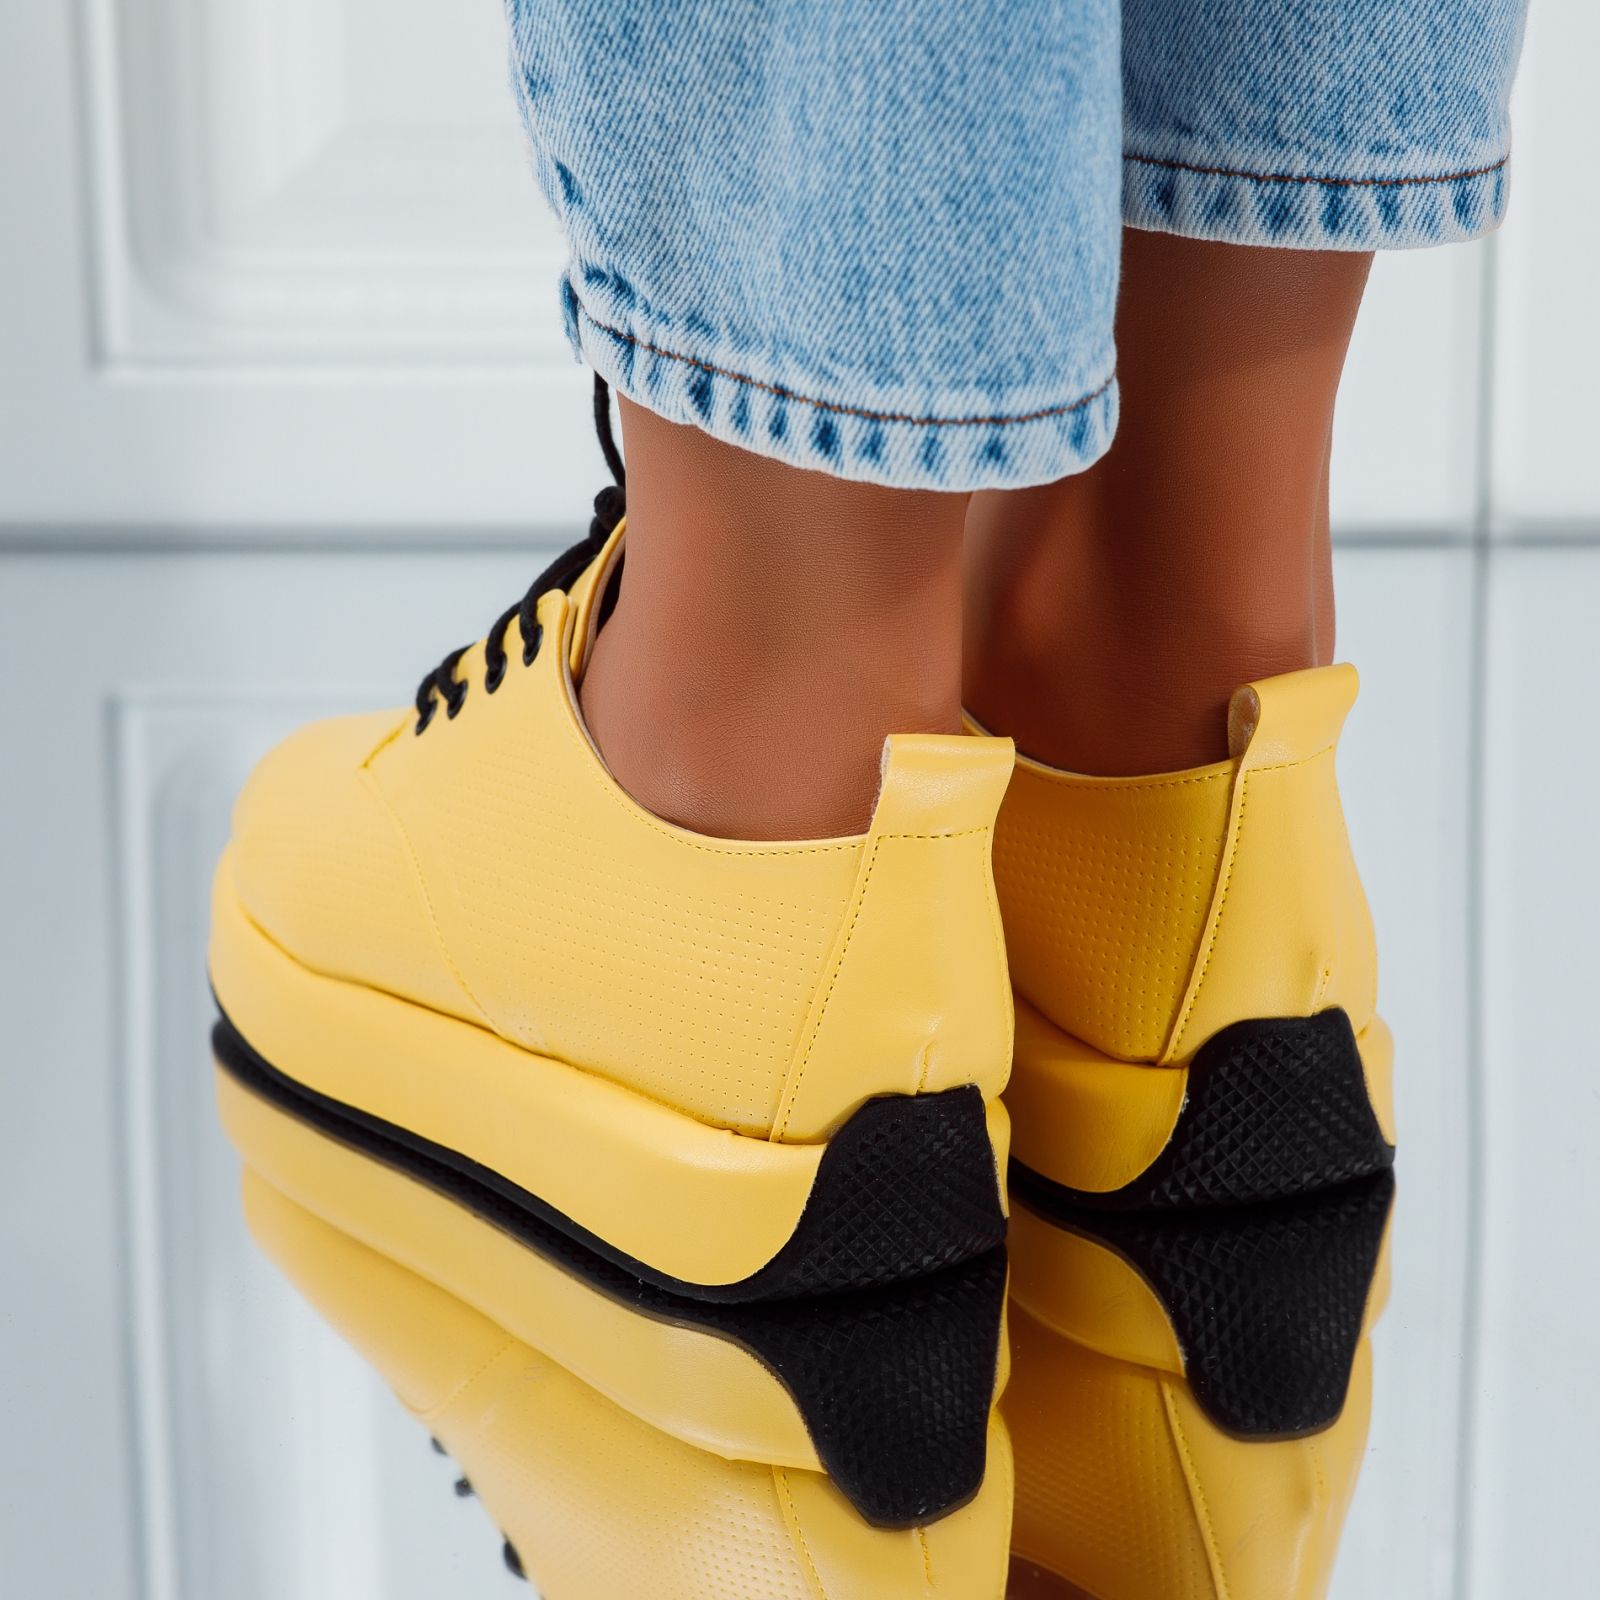 Alkalmi cipő sárga Chloe #5084M